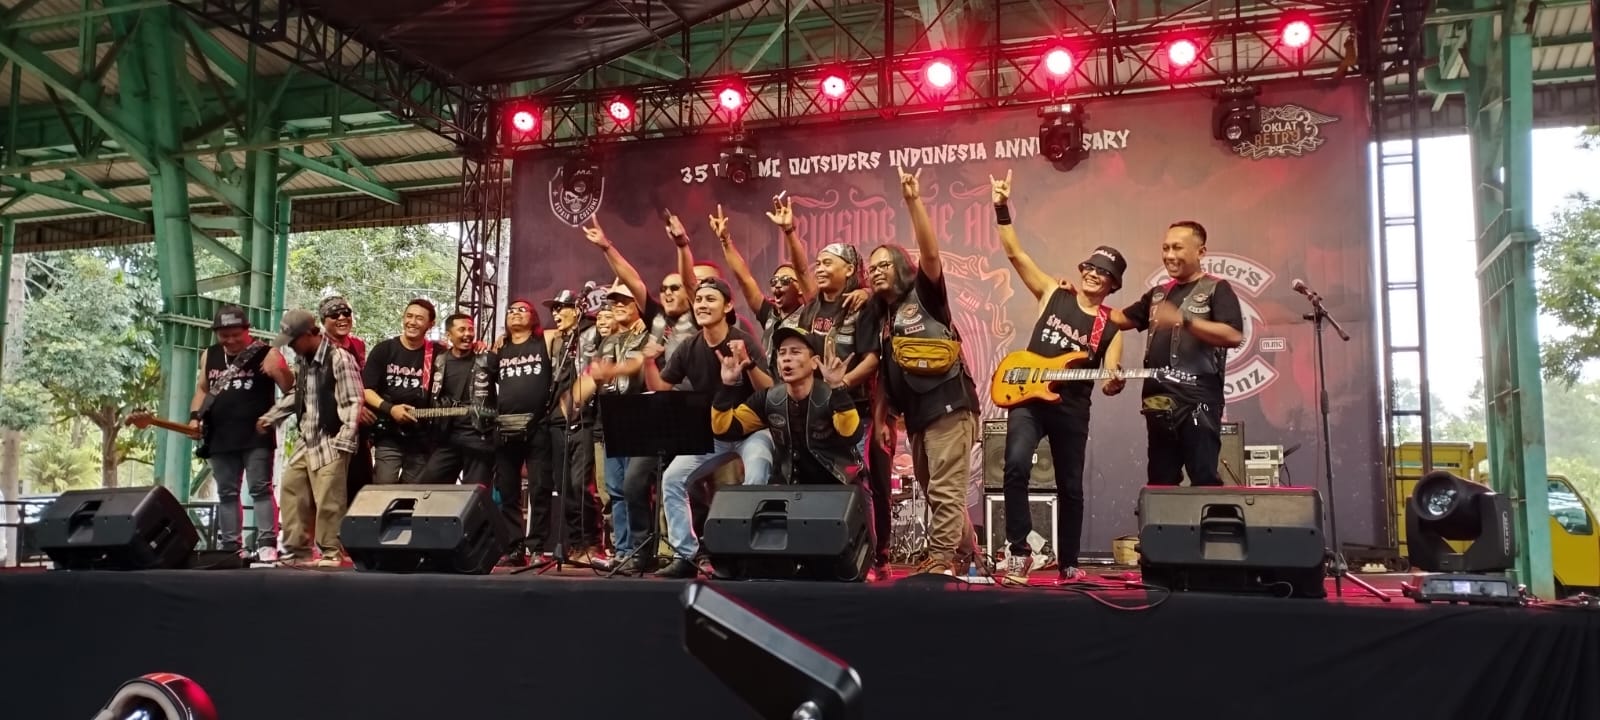 Rayakan Anniversary ke 35 Tahun, MMC Outsider’s Indonesia Ngumpul di Ciater,  Bawa Pesan Damai untuk Komunitas Motor